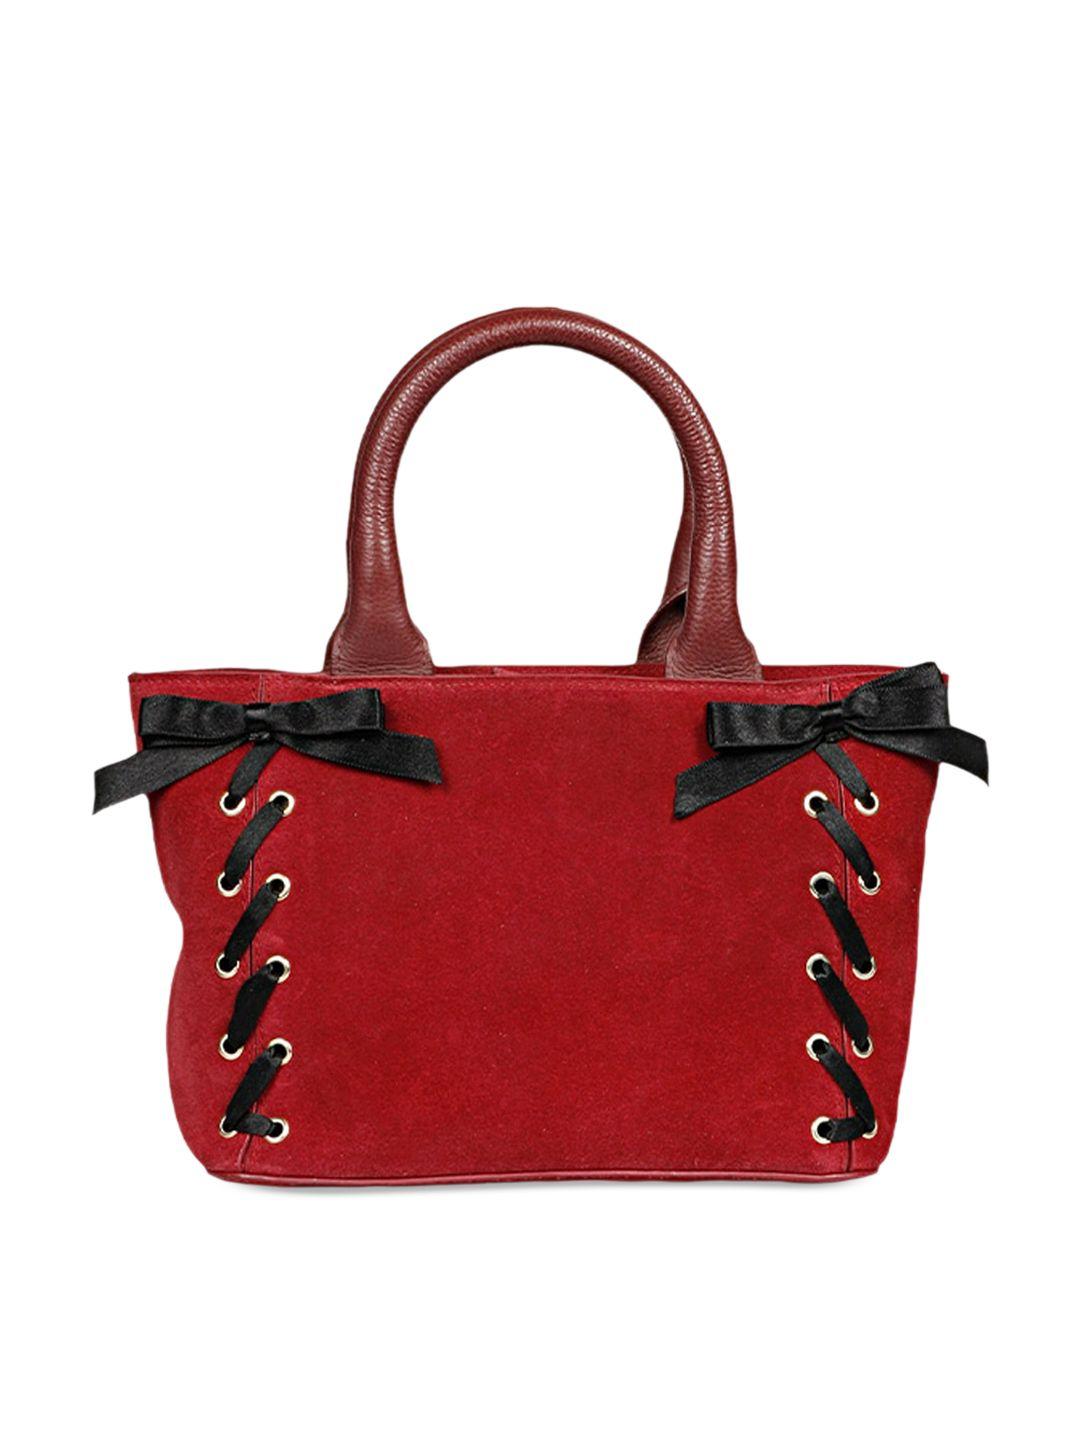 favore embellished leather structured handheld bag with fringed